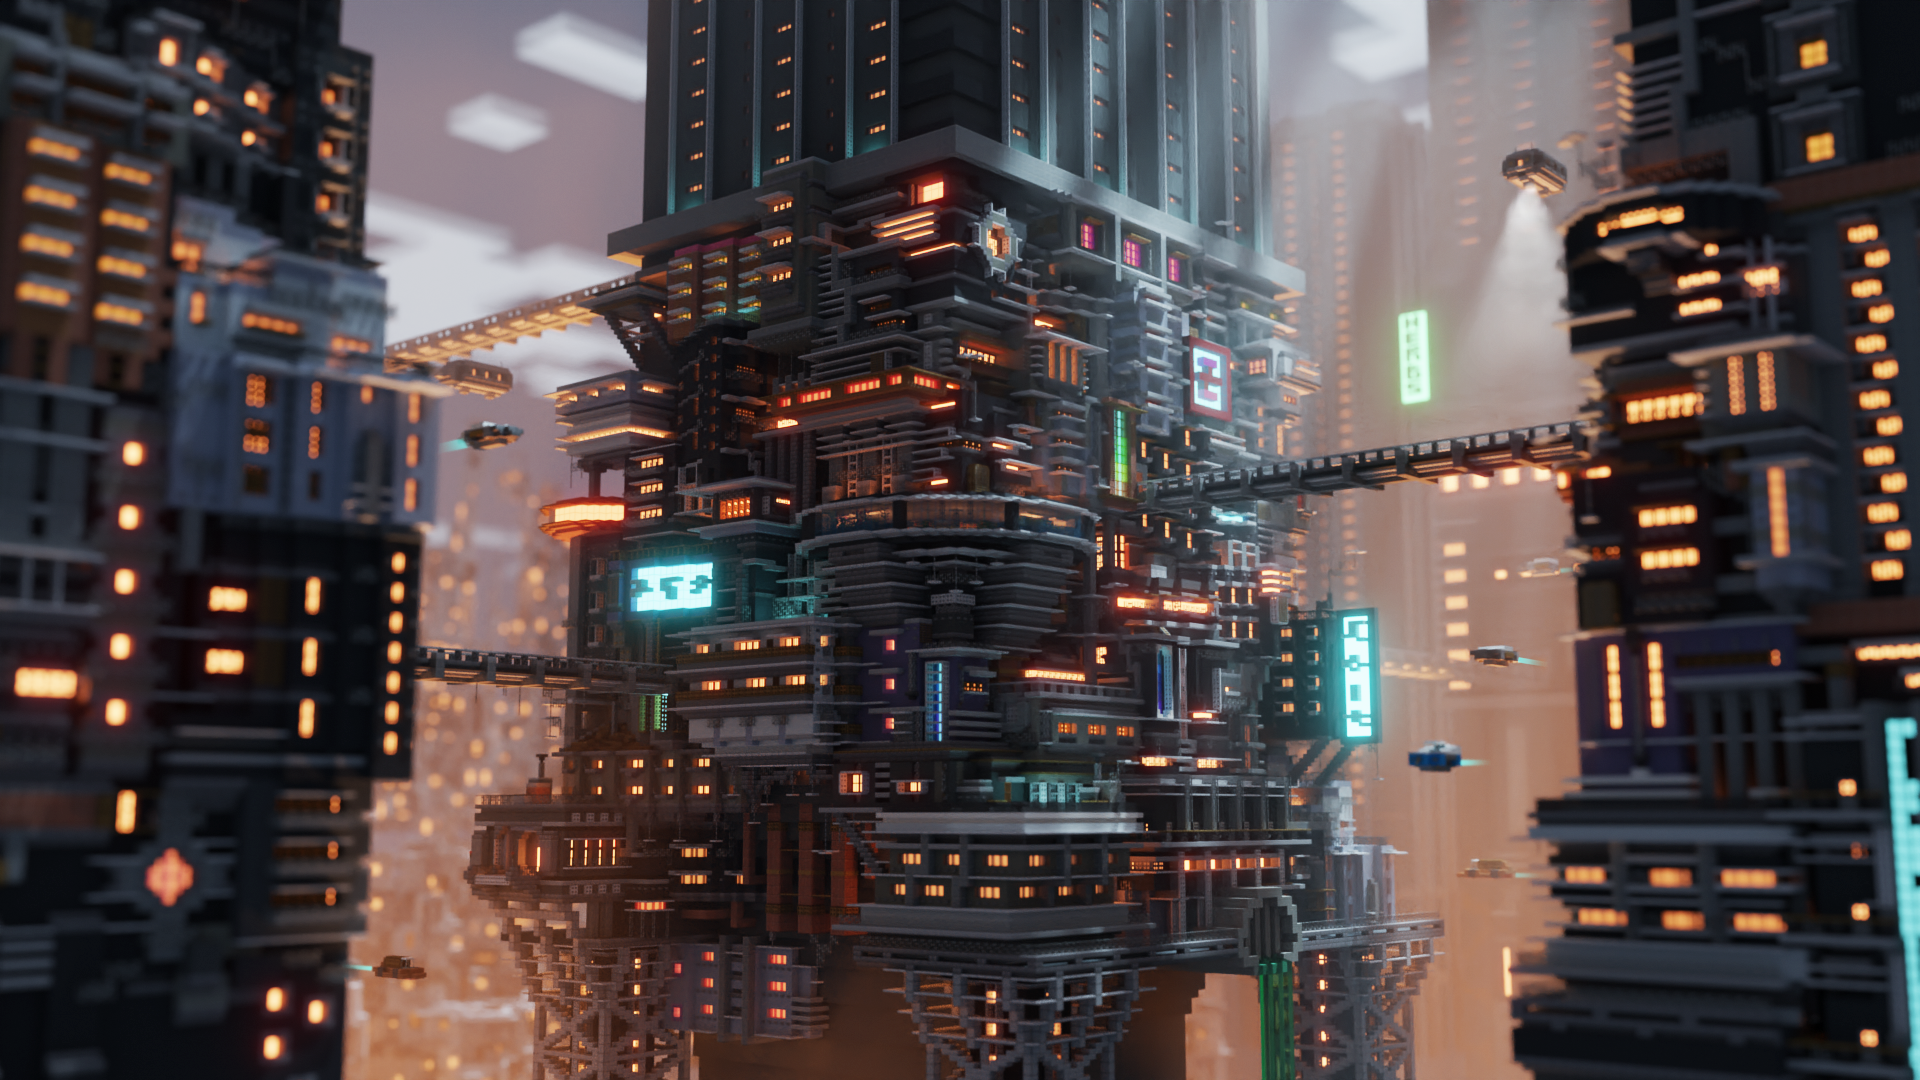 Cyberpunk build